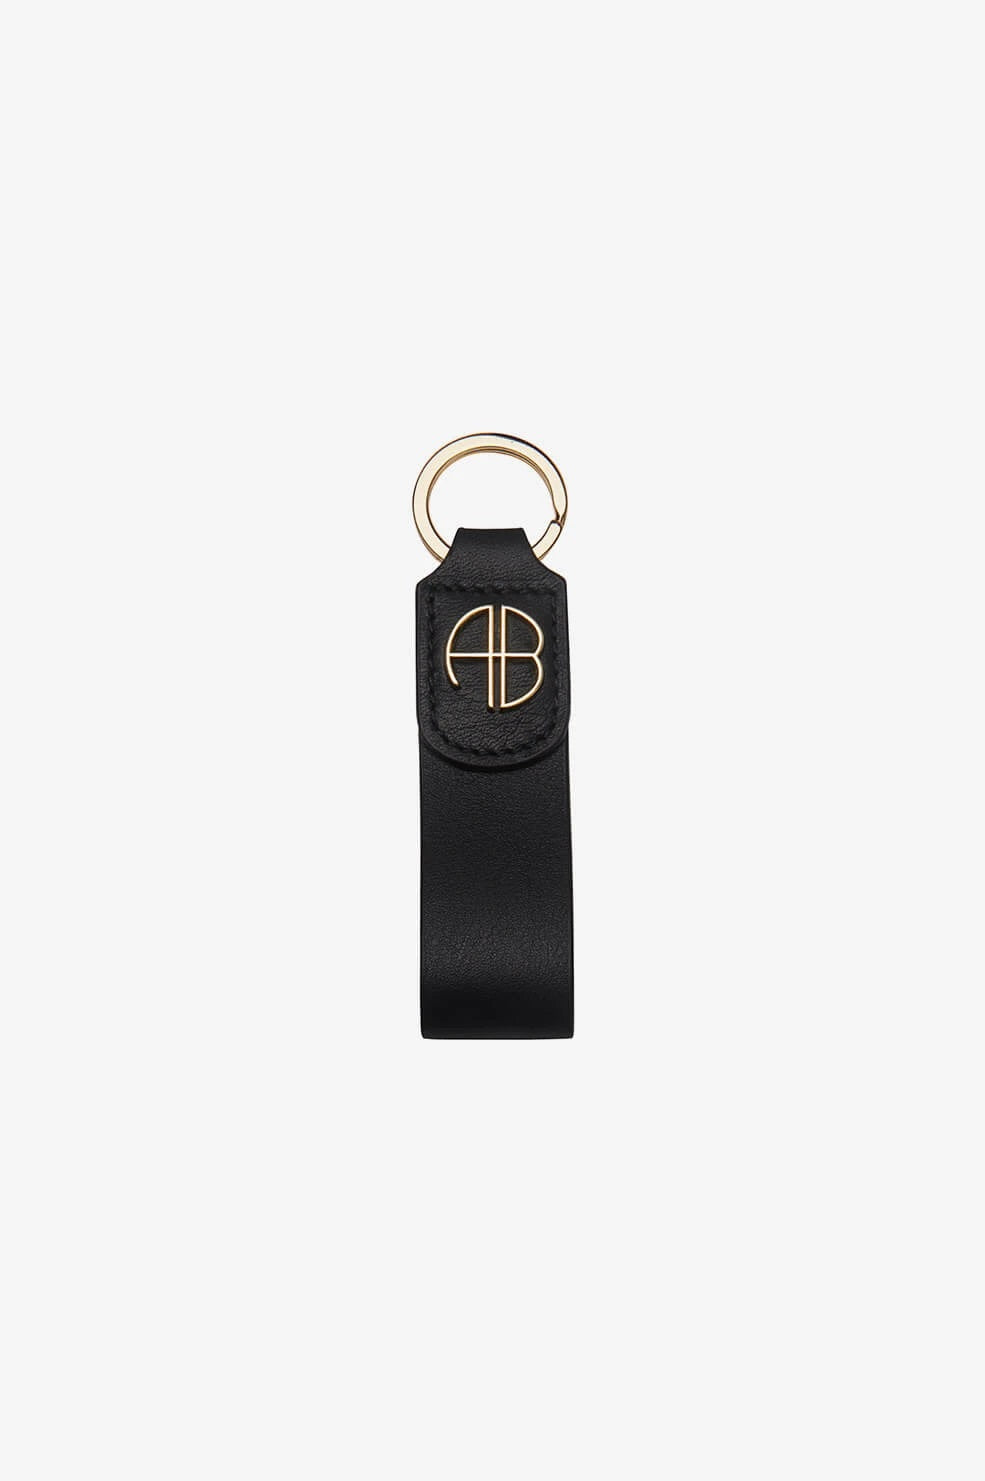 Anine Bing - AB Key Chain in Black